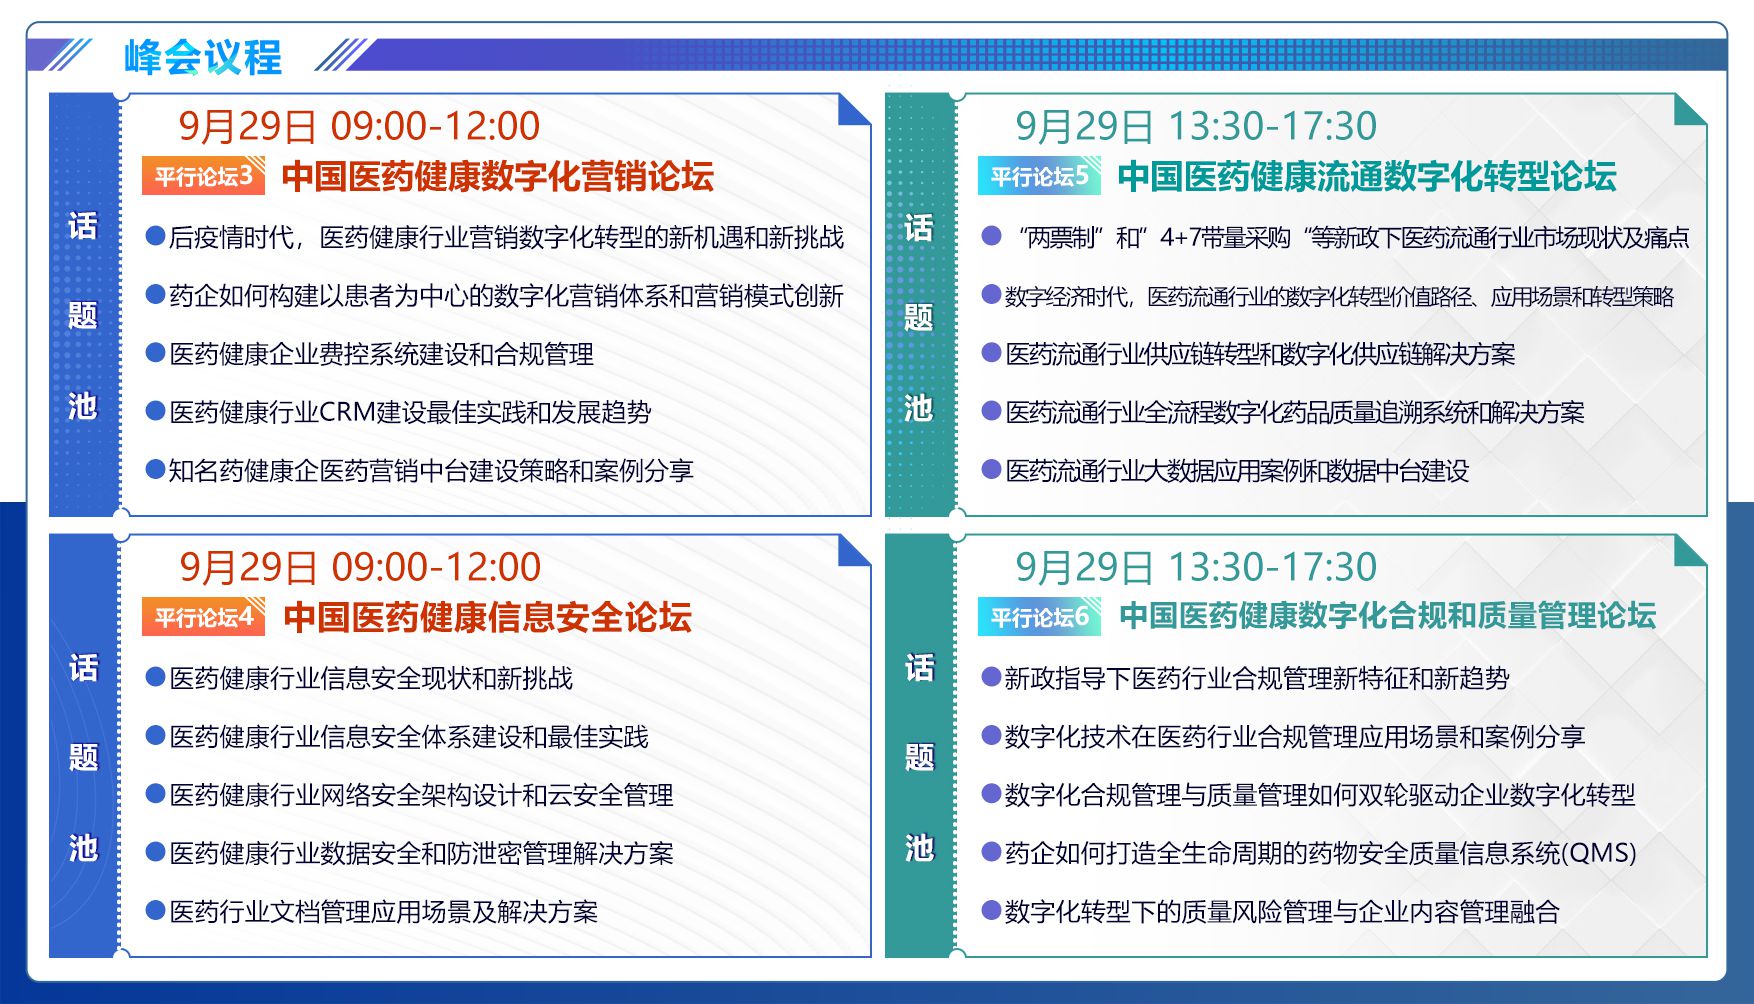 MDT 2021中国医药健康数字科技大会